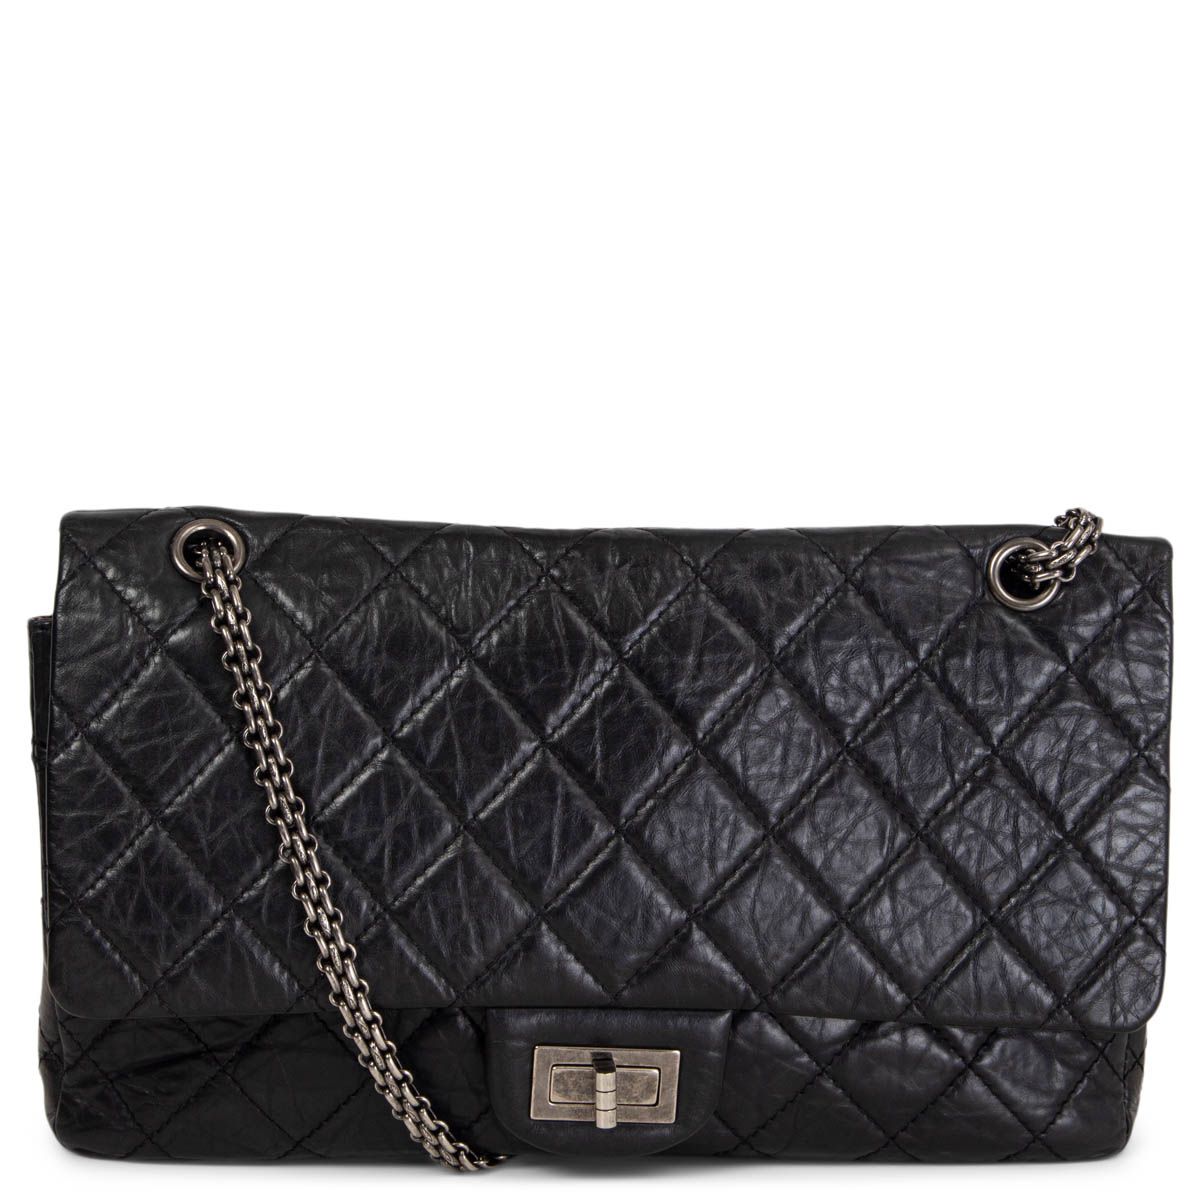 Chanel 2.55 Maxi Shoulder Bag Black Aged Calfskin Leather Double Flap